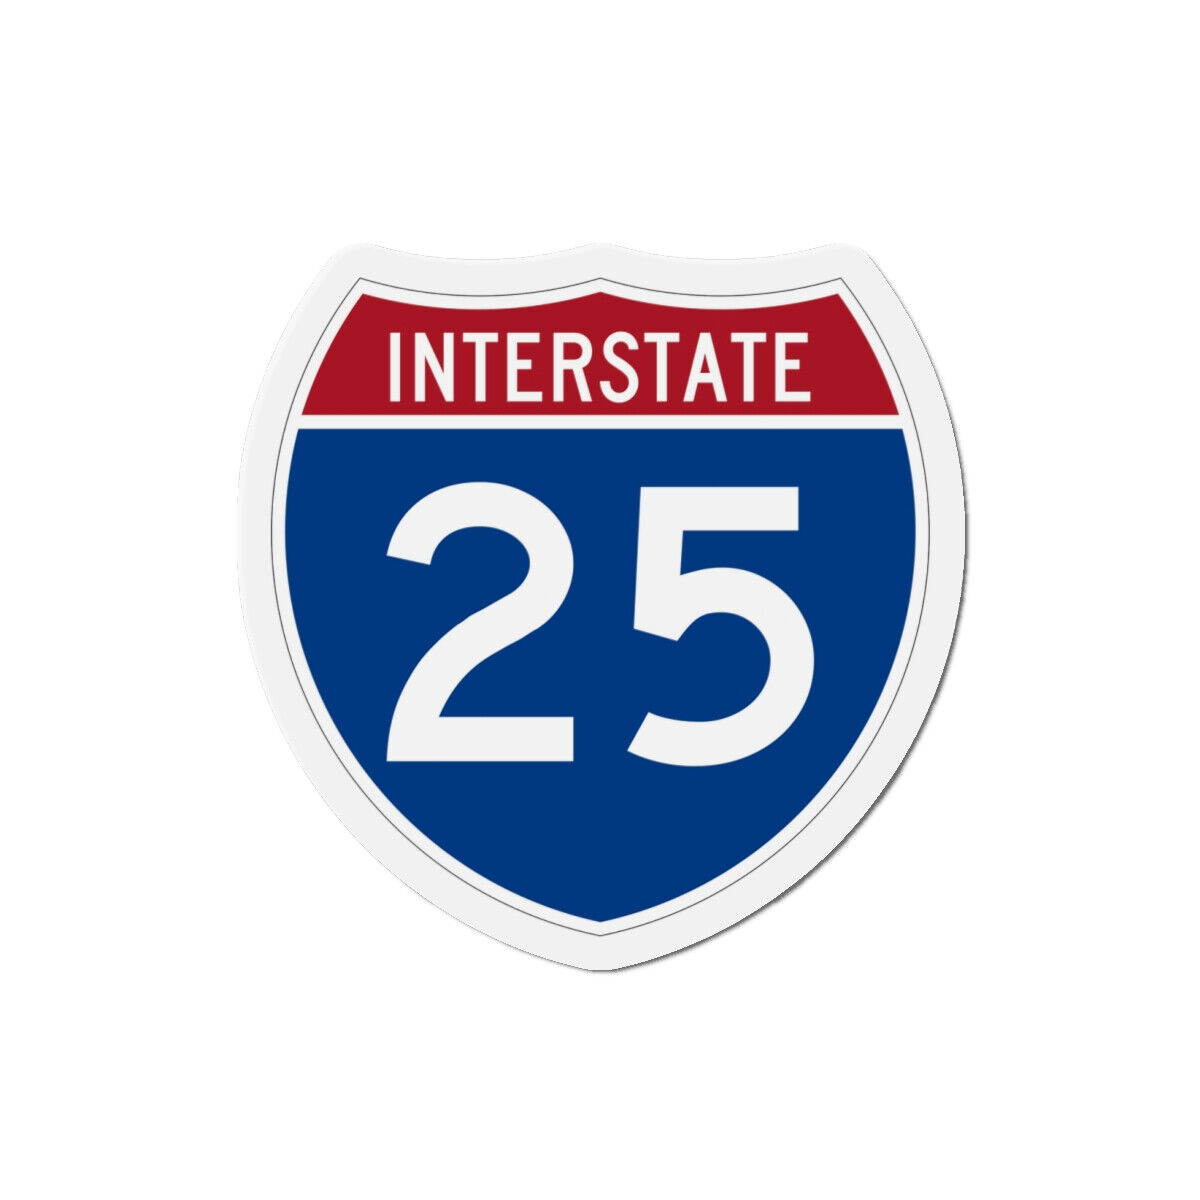 Interstate 25 (U.S. Highways) Die-Cut Magnet